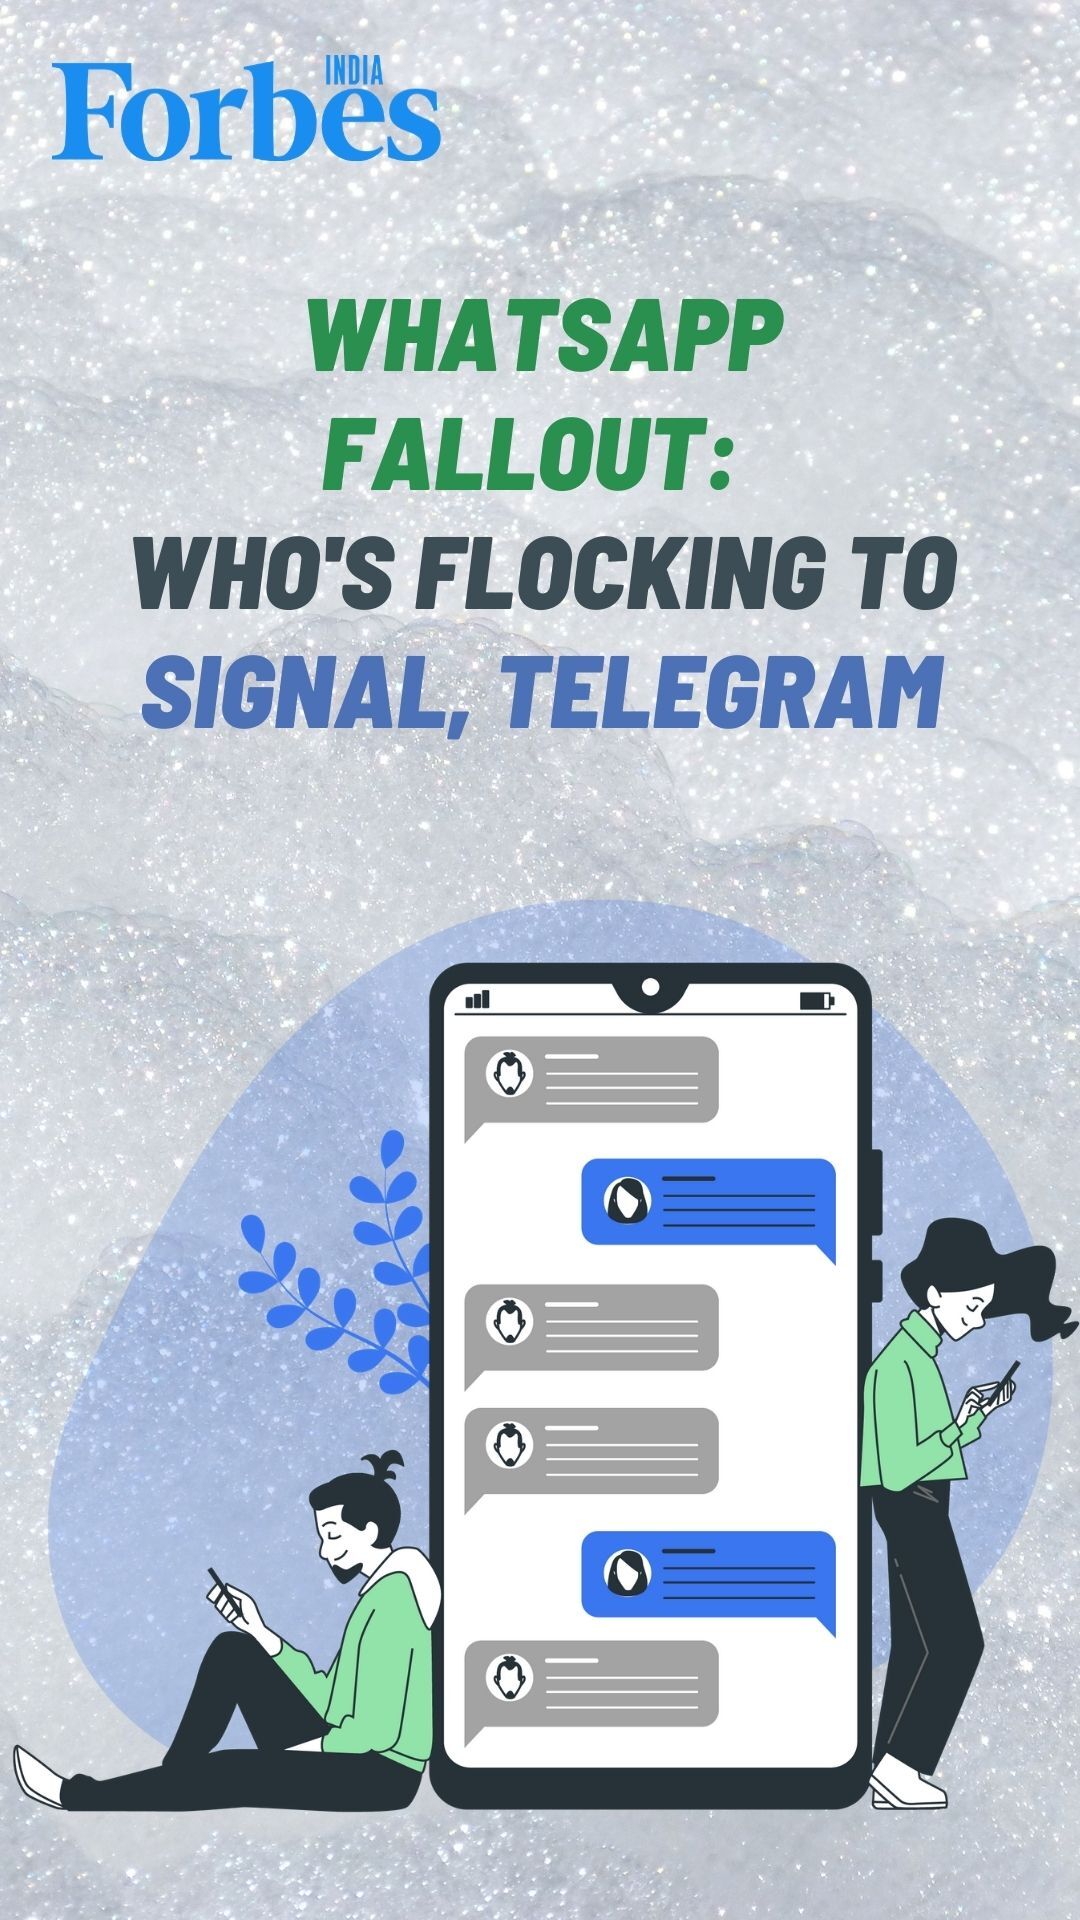 WhatsApp fallout: Who's flocking to Signal, Telegram